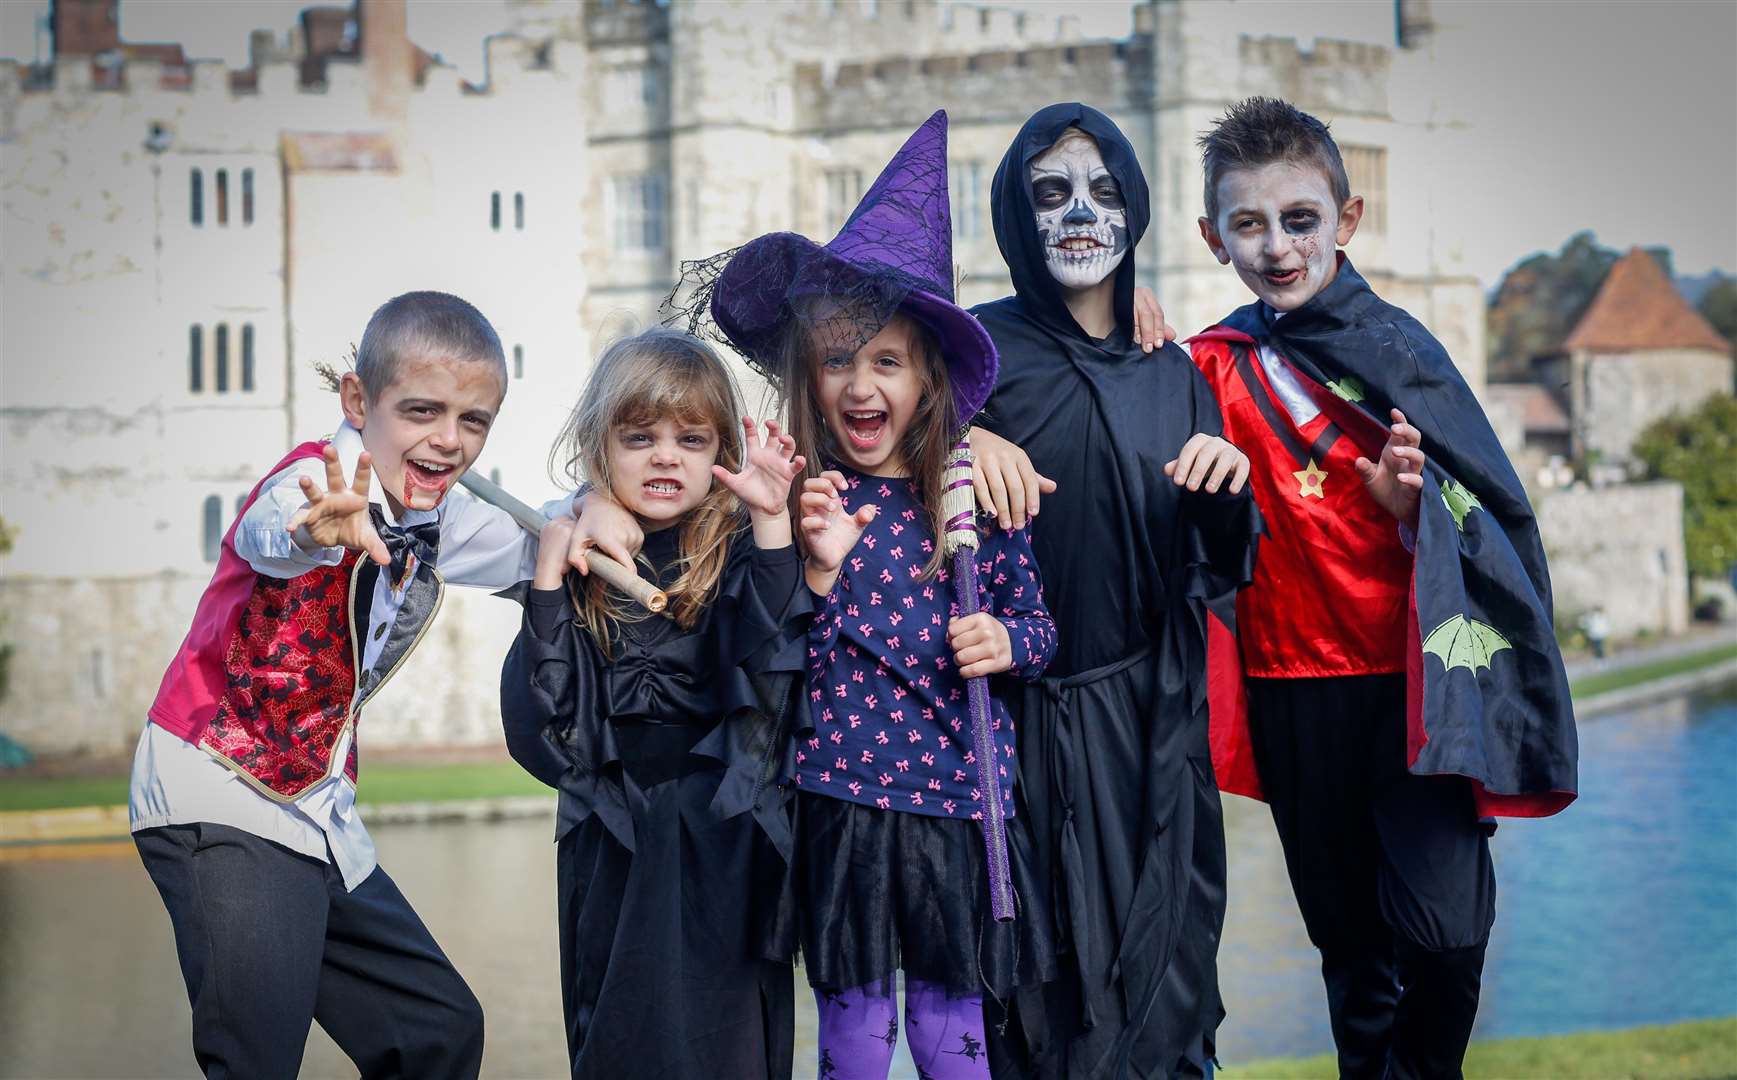 Halloween fun at Leeds Castle Picture: matthewwalkerphotography.com